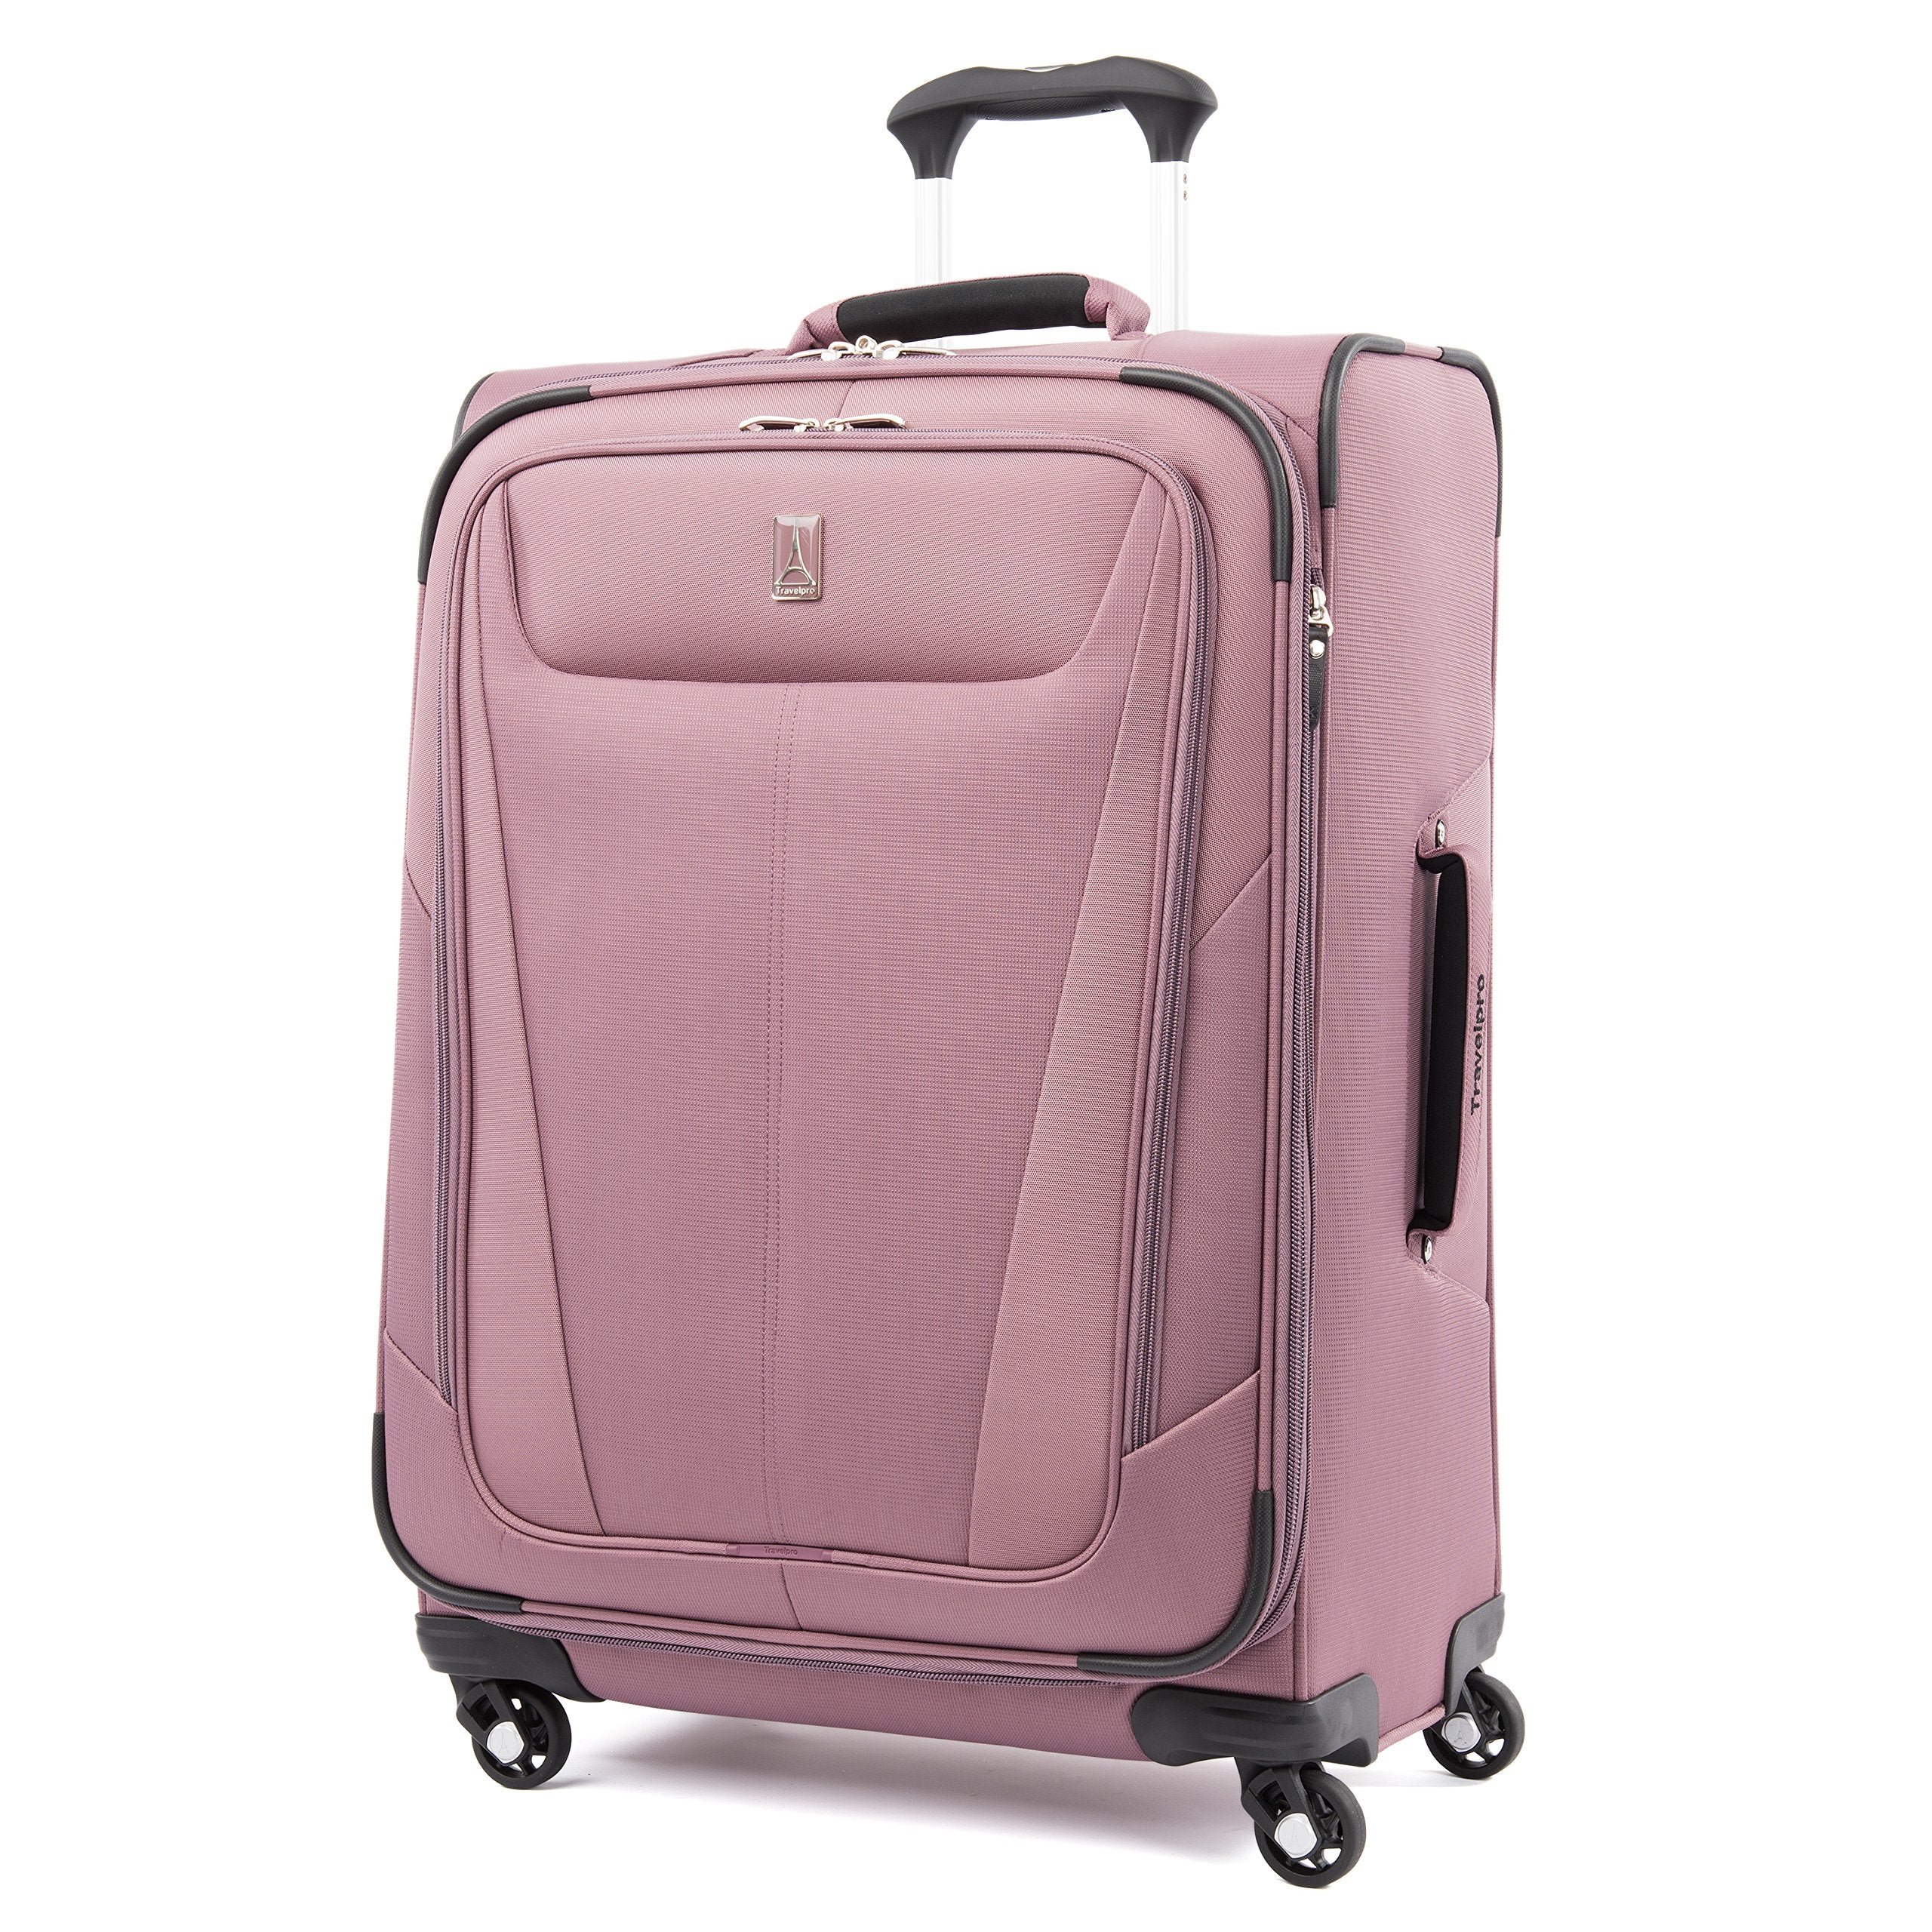 Travelpro Maxlite 5 2-Piece Set (21/25) 4-Wheel Softside Luggage Mocha / 2-Piece Set (21/25)